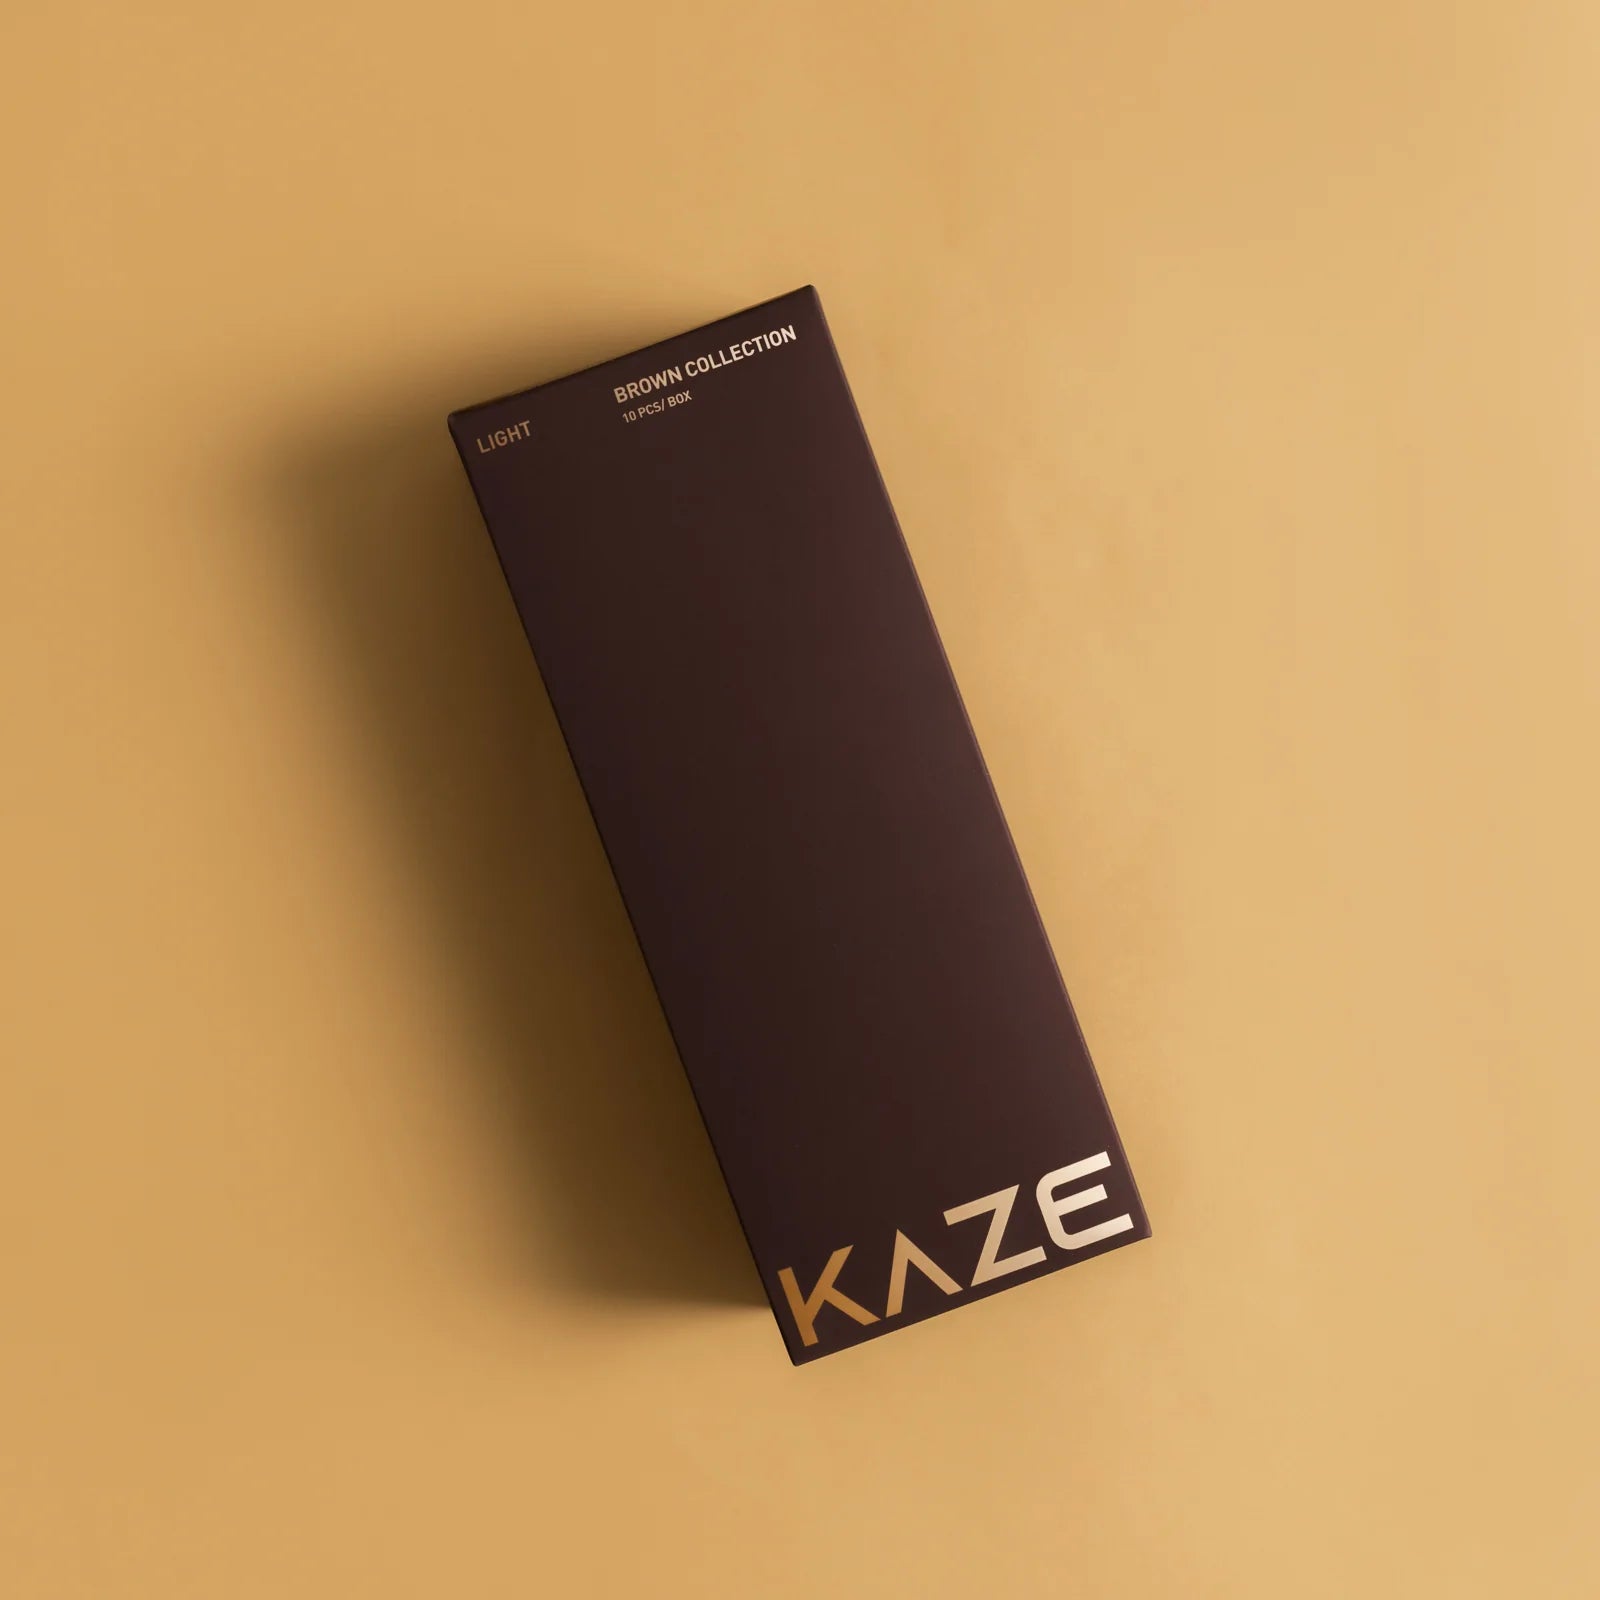 KAZE Masks - Light Brown Collection